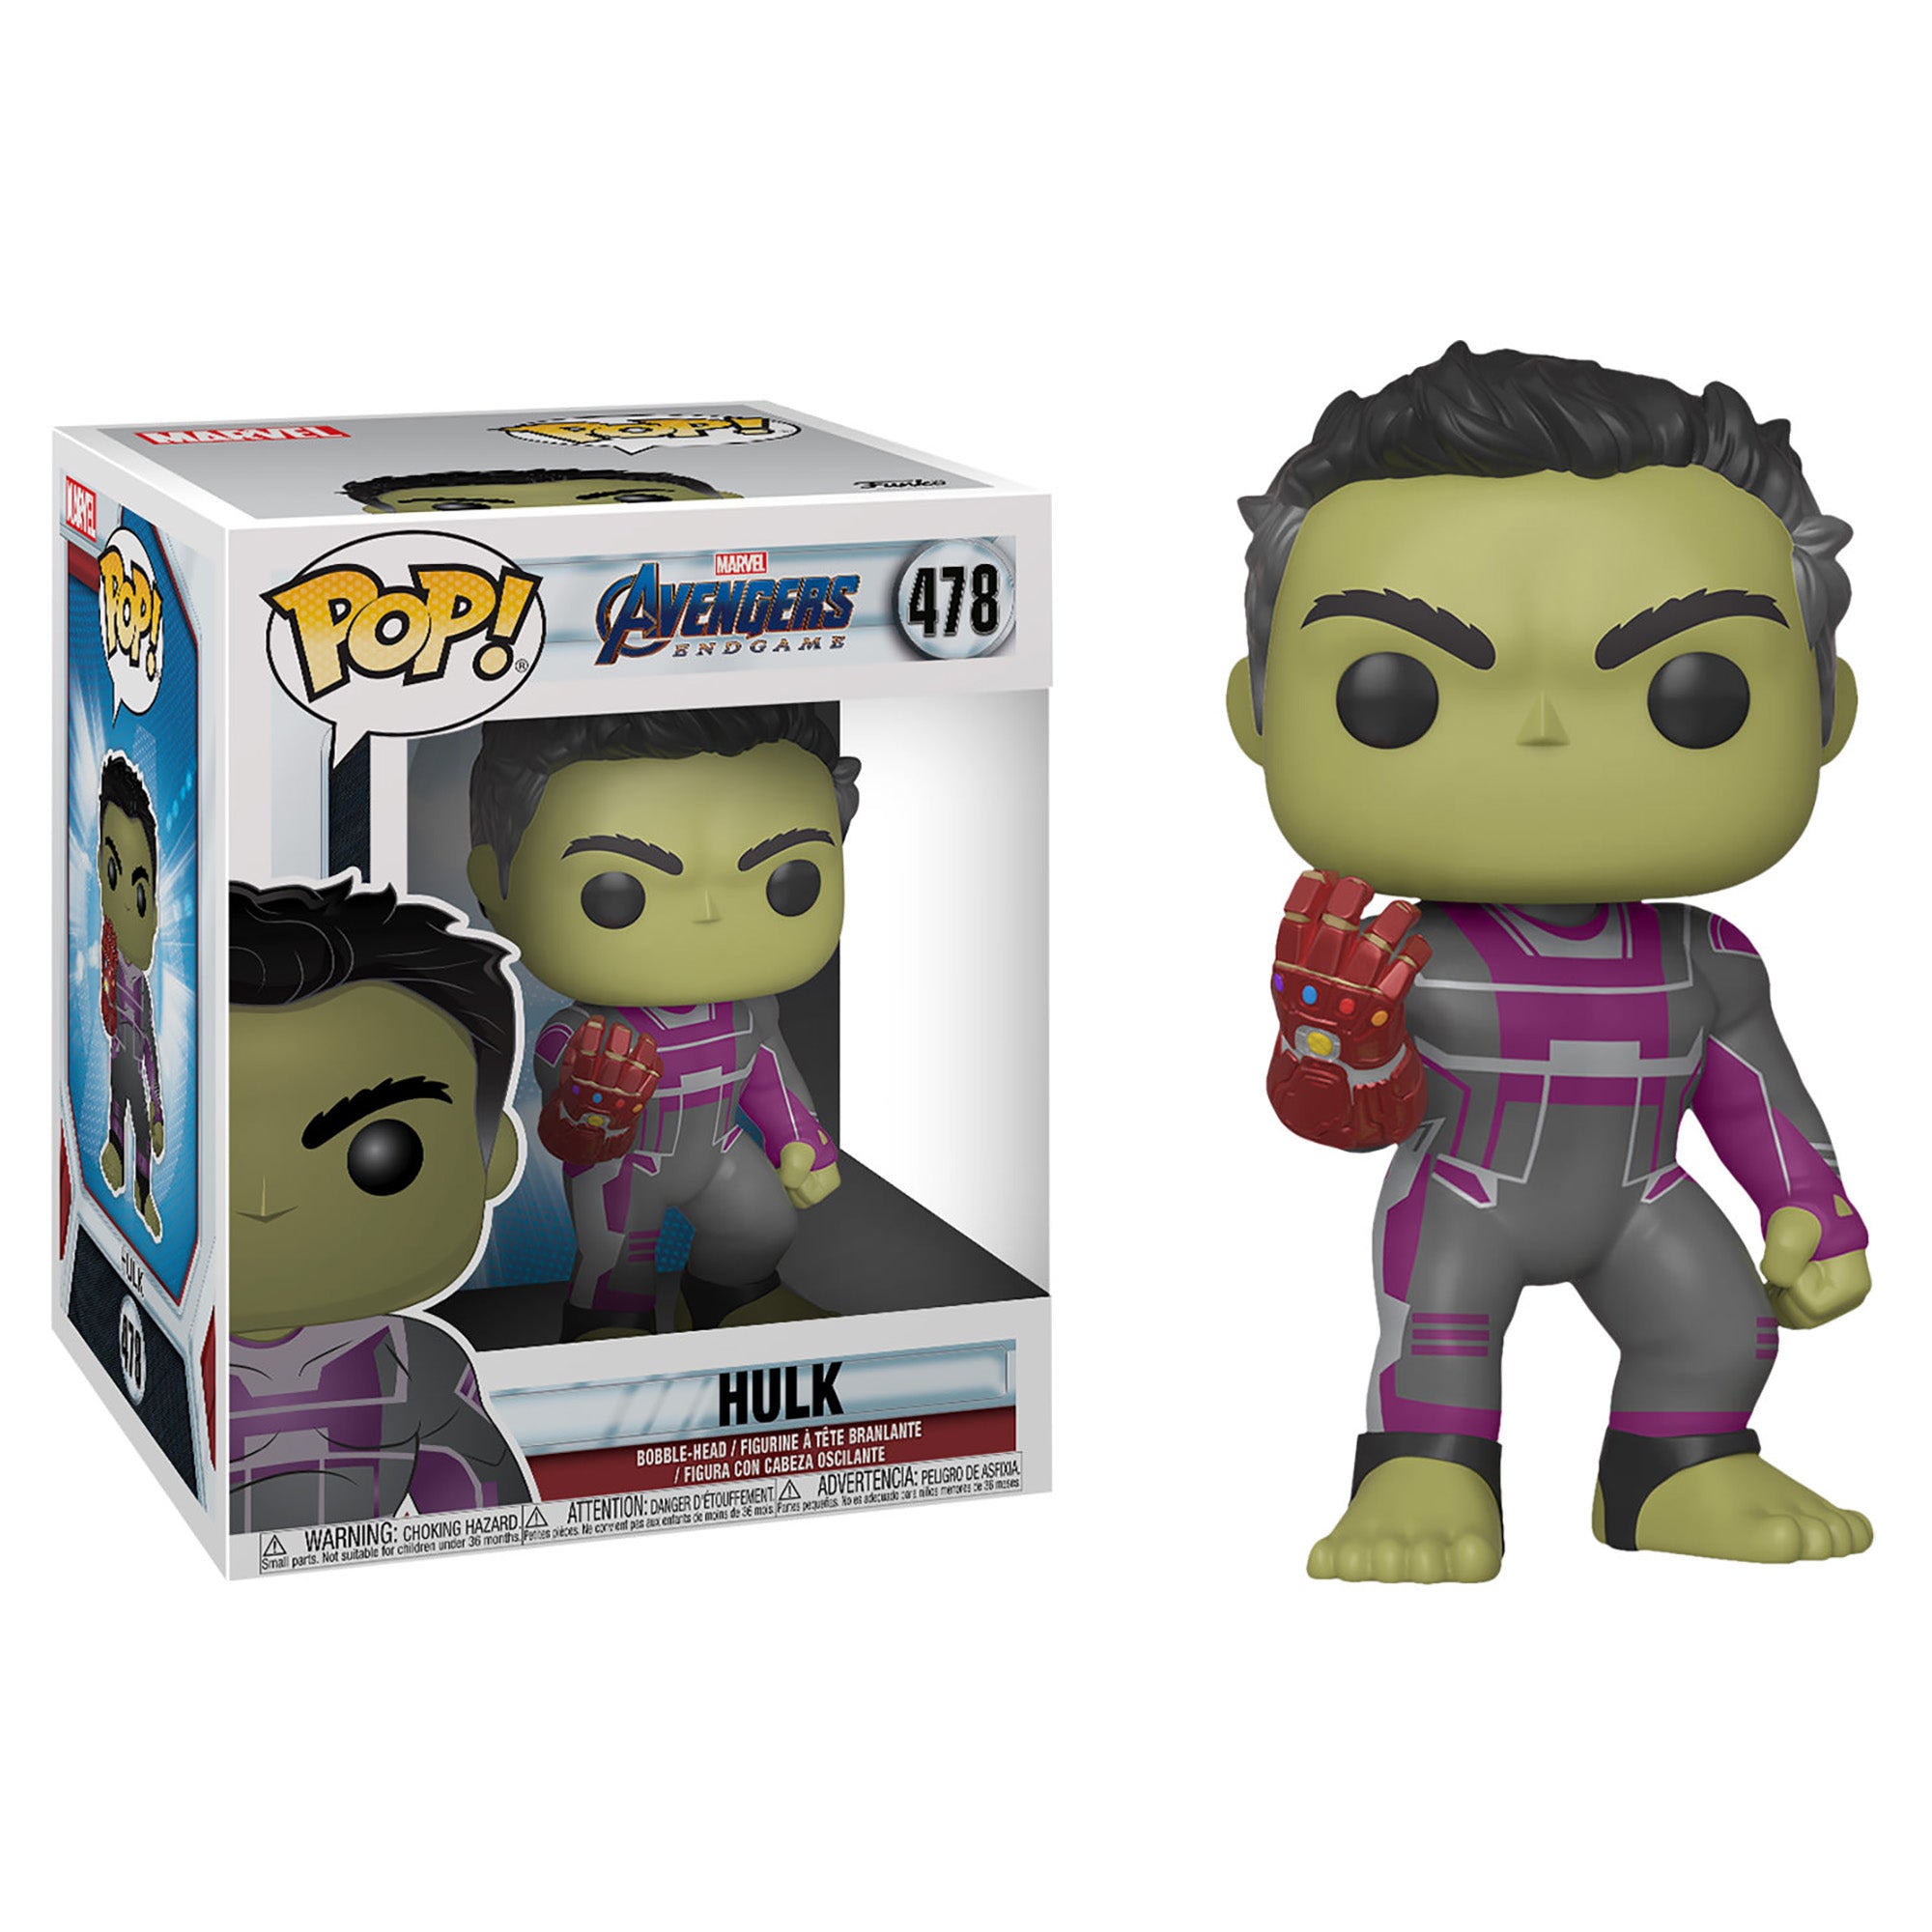 Funko Avengers 4: Endgame - Hulk with Gauntlet Pop! Vinyl Figure (6 inches)